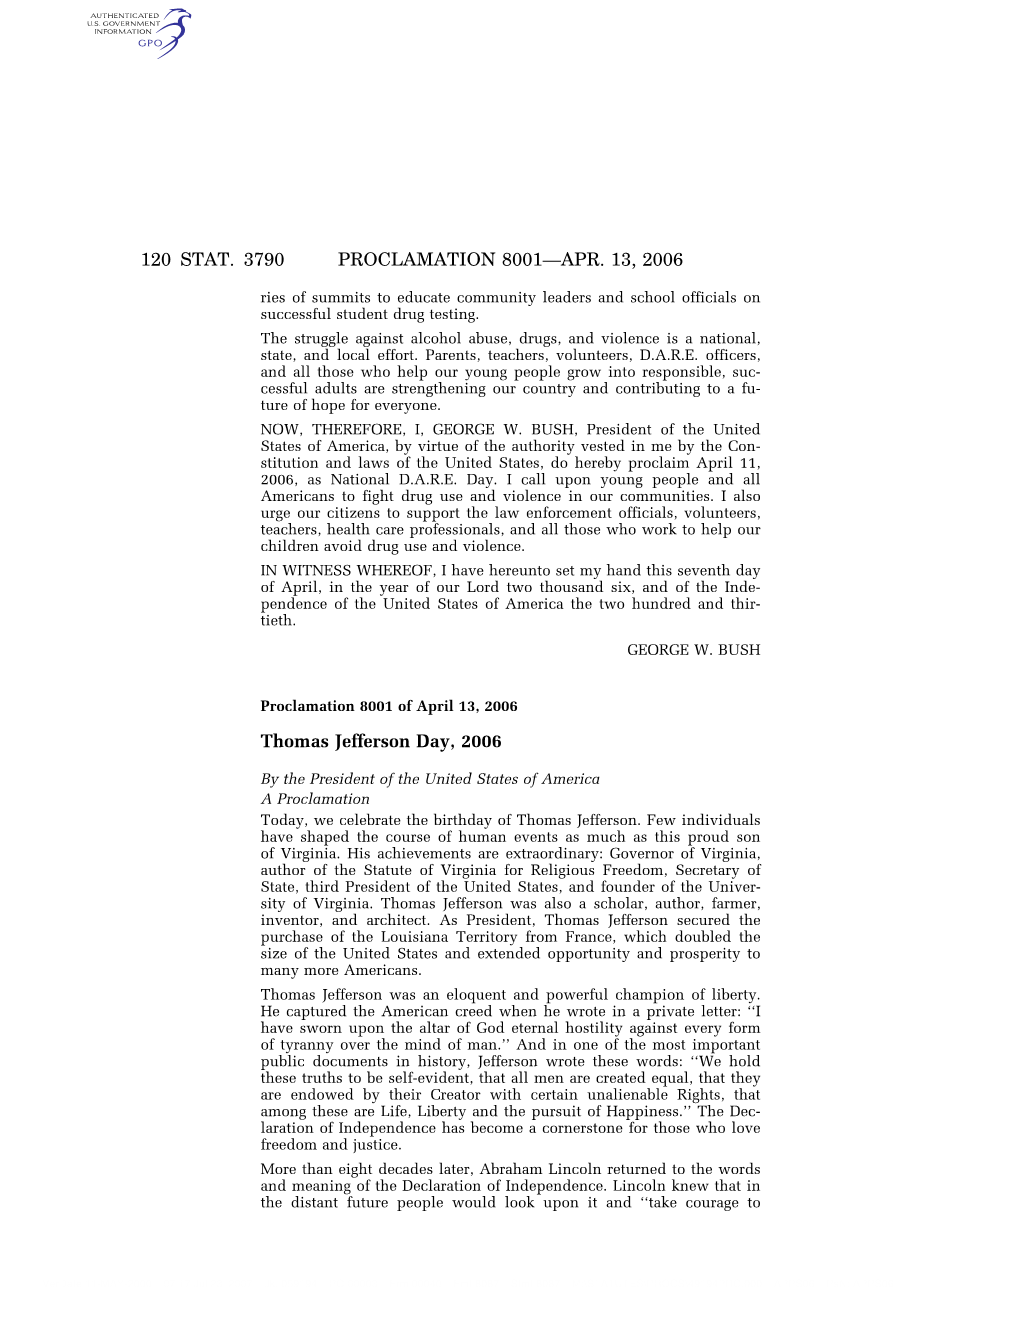 120 Stat. 3790 Proclamation 8001—Apr. 13, 2006